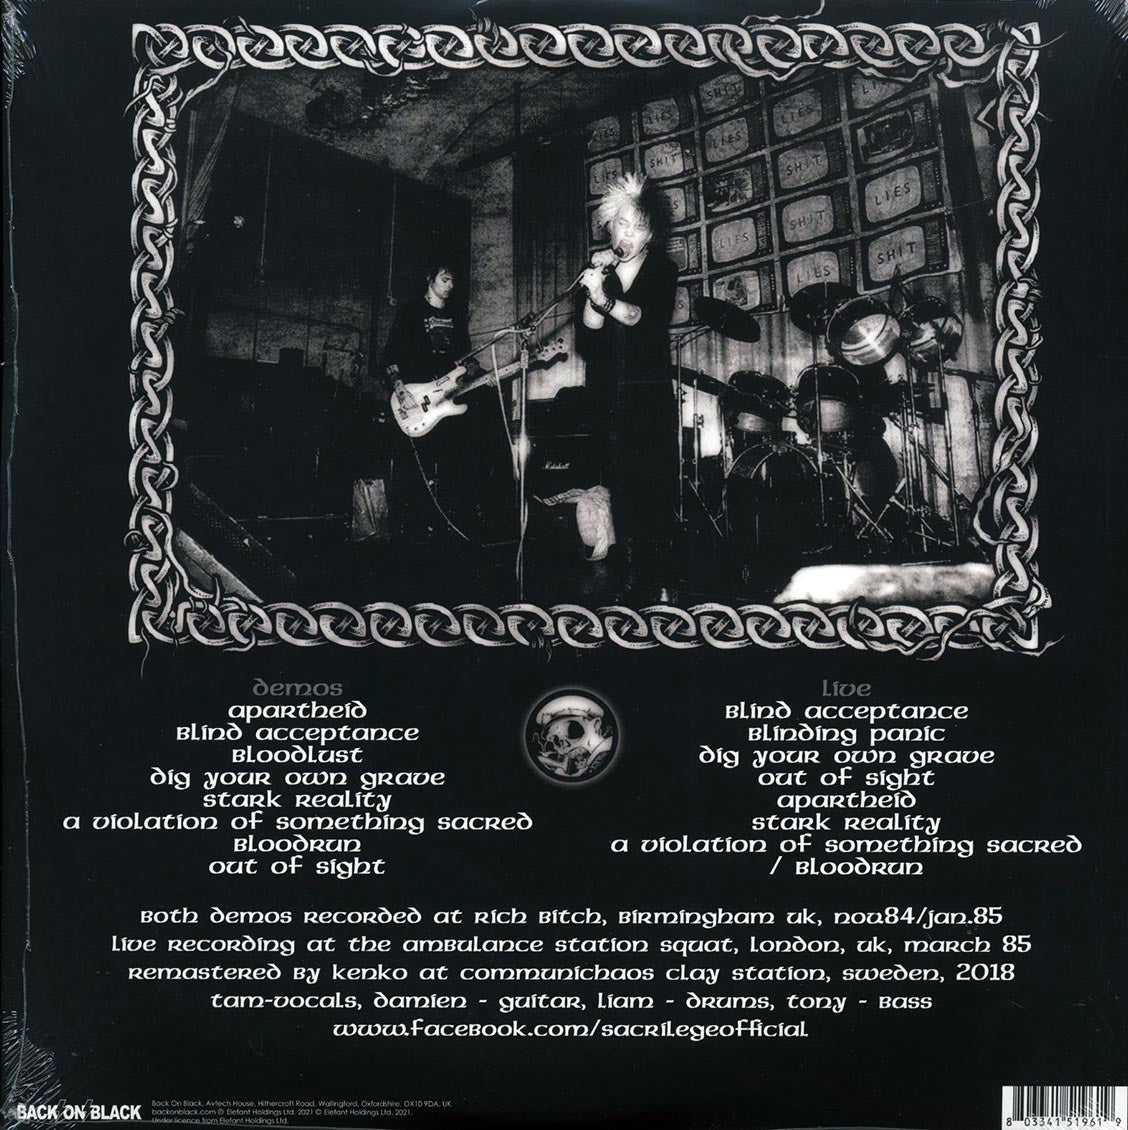 Sacrilege - Ambulance Station Squat, London, 1985 + The First & Second Demos (ltd. ed.) (splatter vinyl) - Vinyl LP, LP